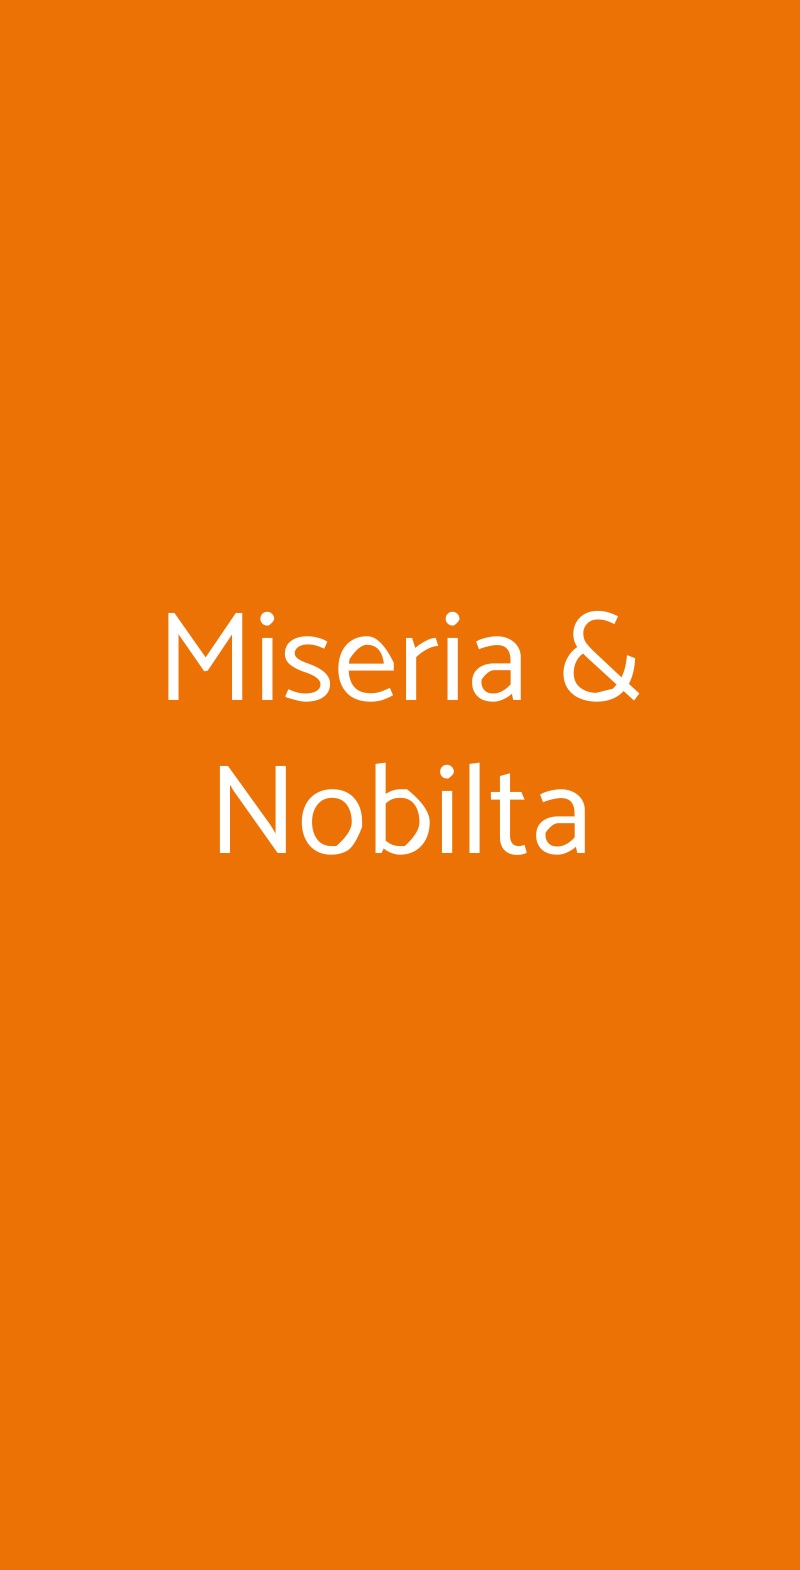 Miseria & Nobilta Mascalucia menù 1 pagina